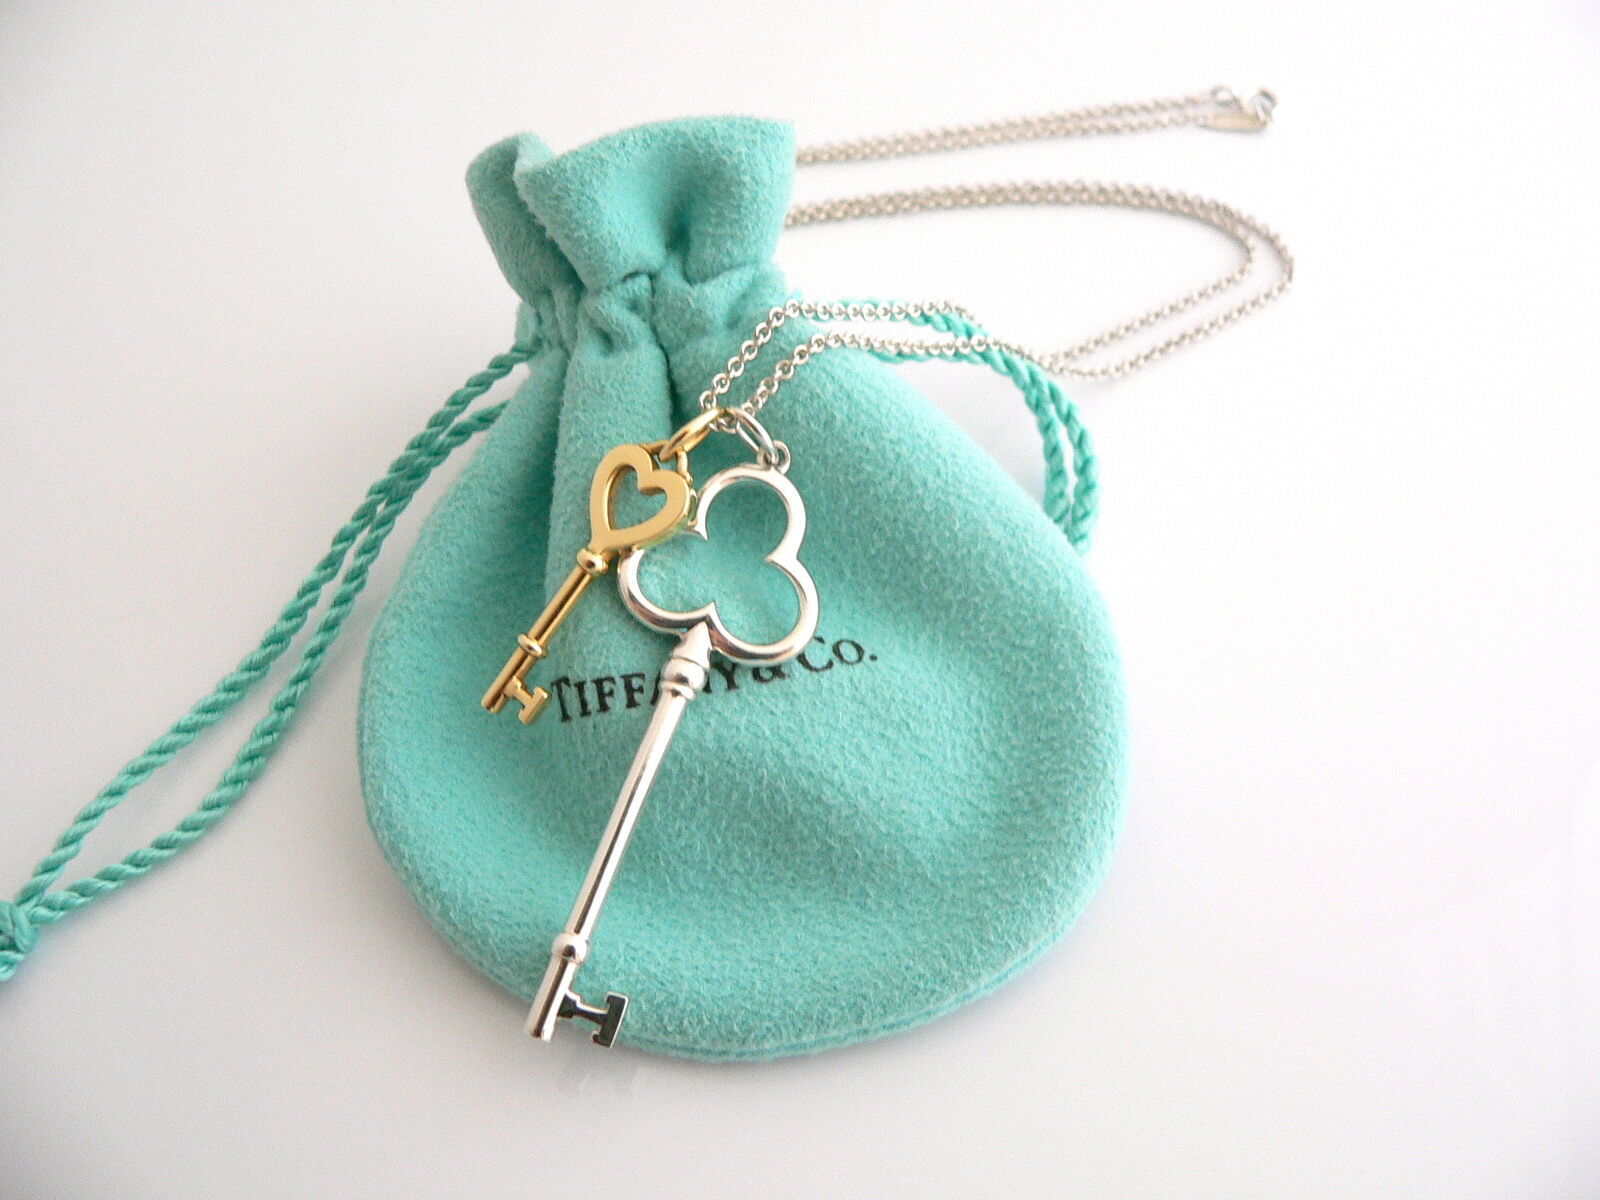 Tiffany Co Silver 18K Gold Heart Key Trefoil Necklace Pendant Charm 18 Inch Gift